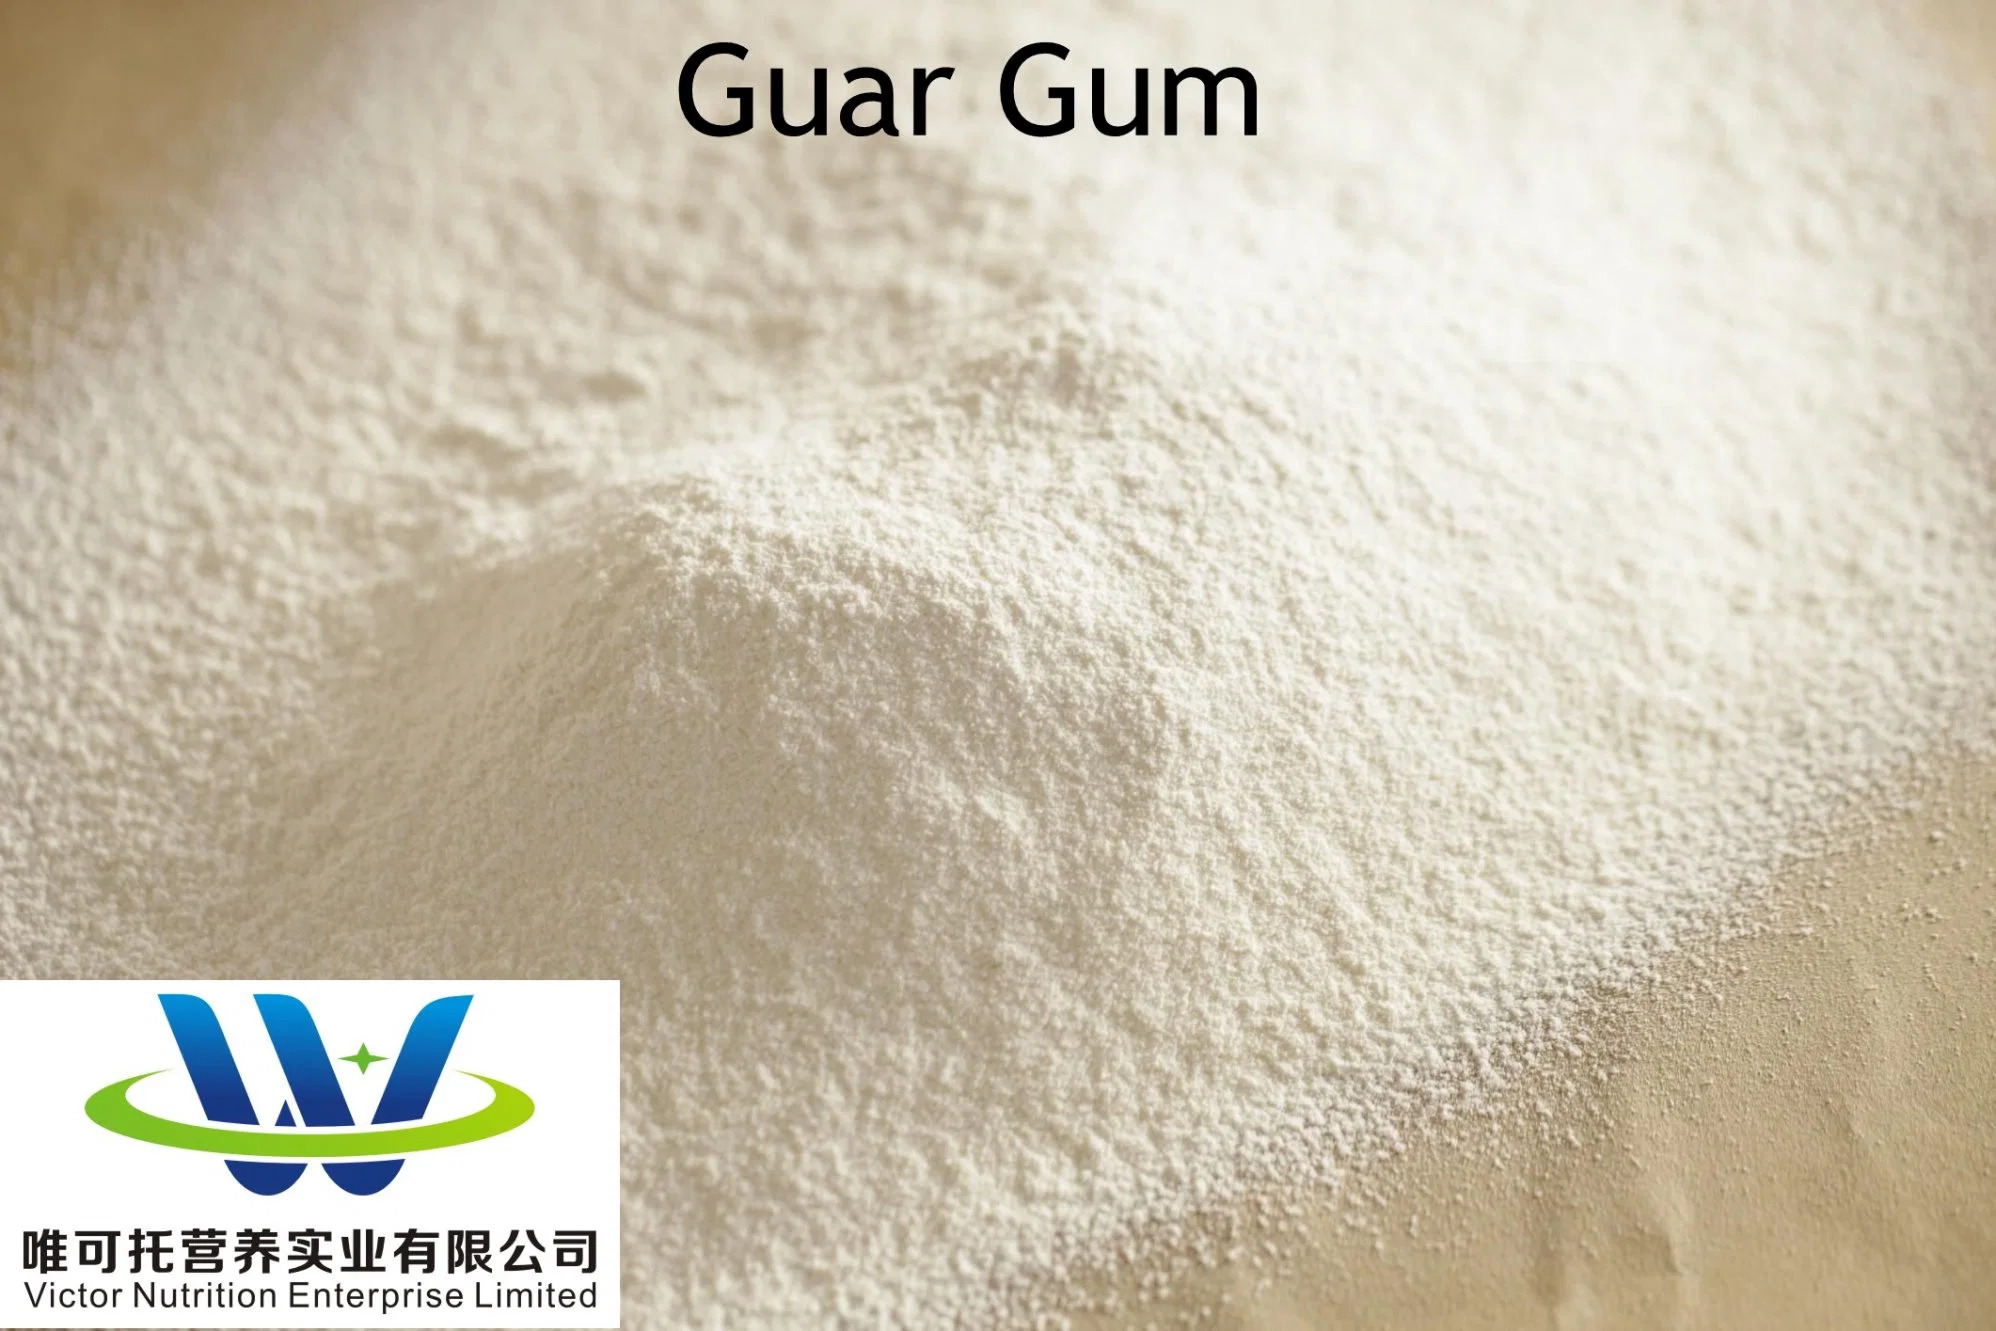 Chinesische Lieferanten Lebensmittelqualität Guar Gum Xanthan Gum